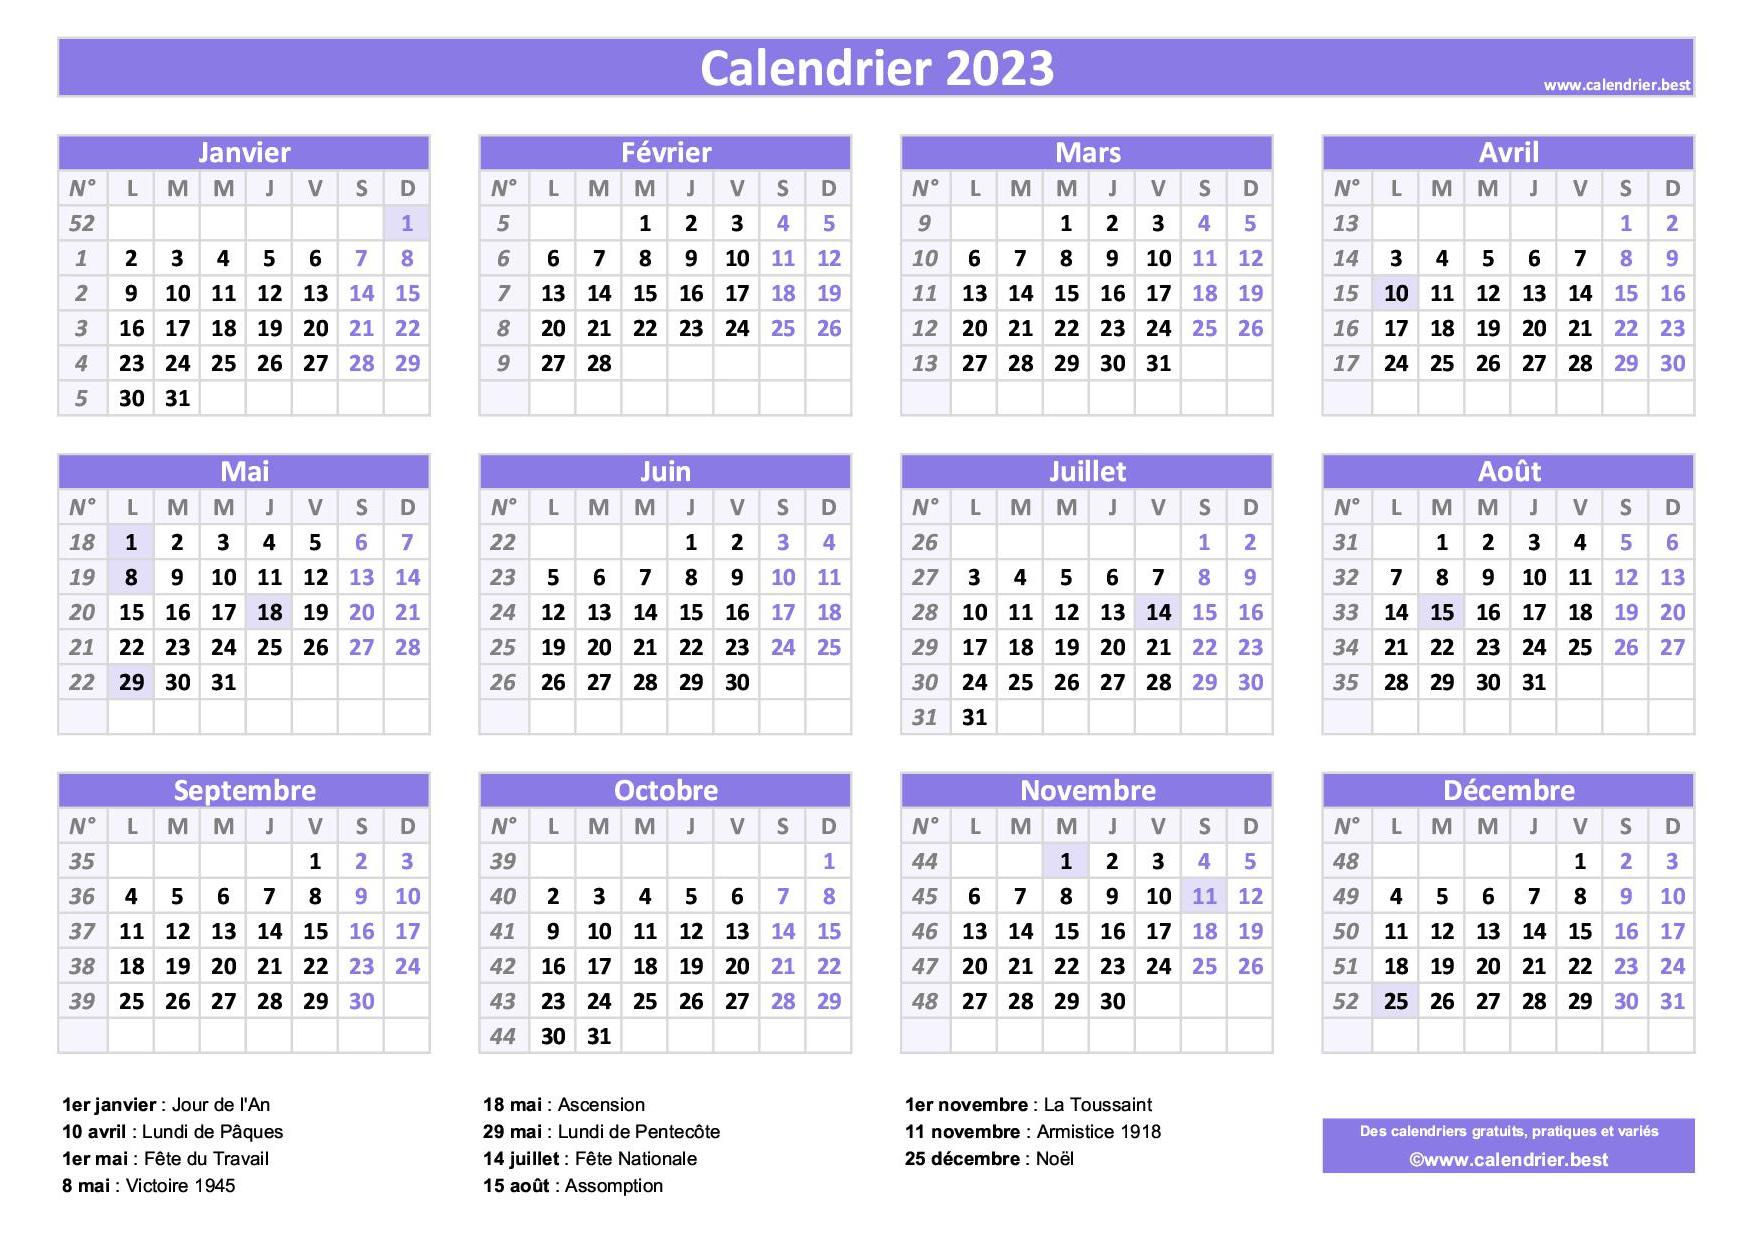 Календарь 2023 года беларусь. Calendrier 2023. Календарная сетка 2023. Сетка календаря 2023 с праздниками.